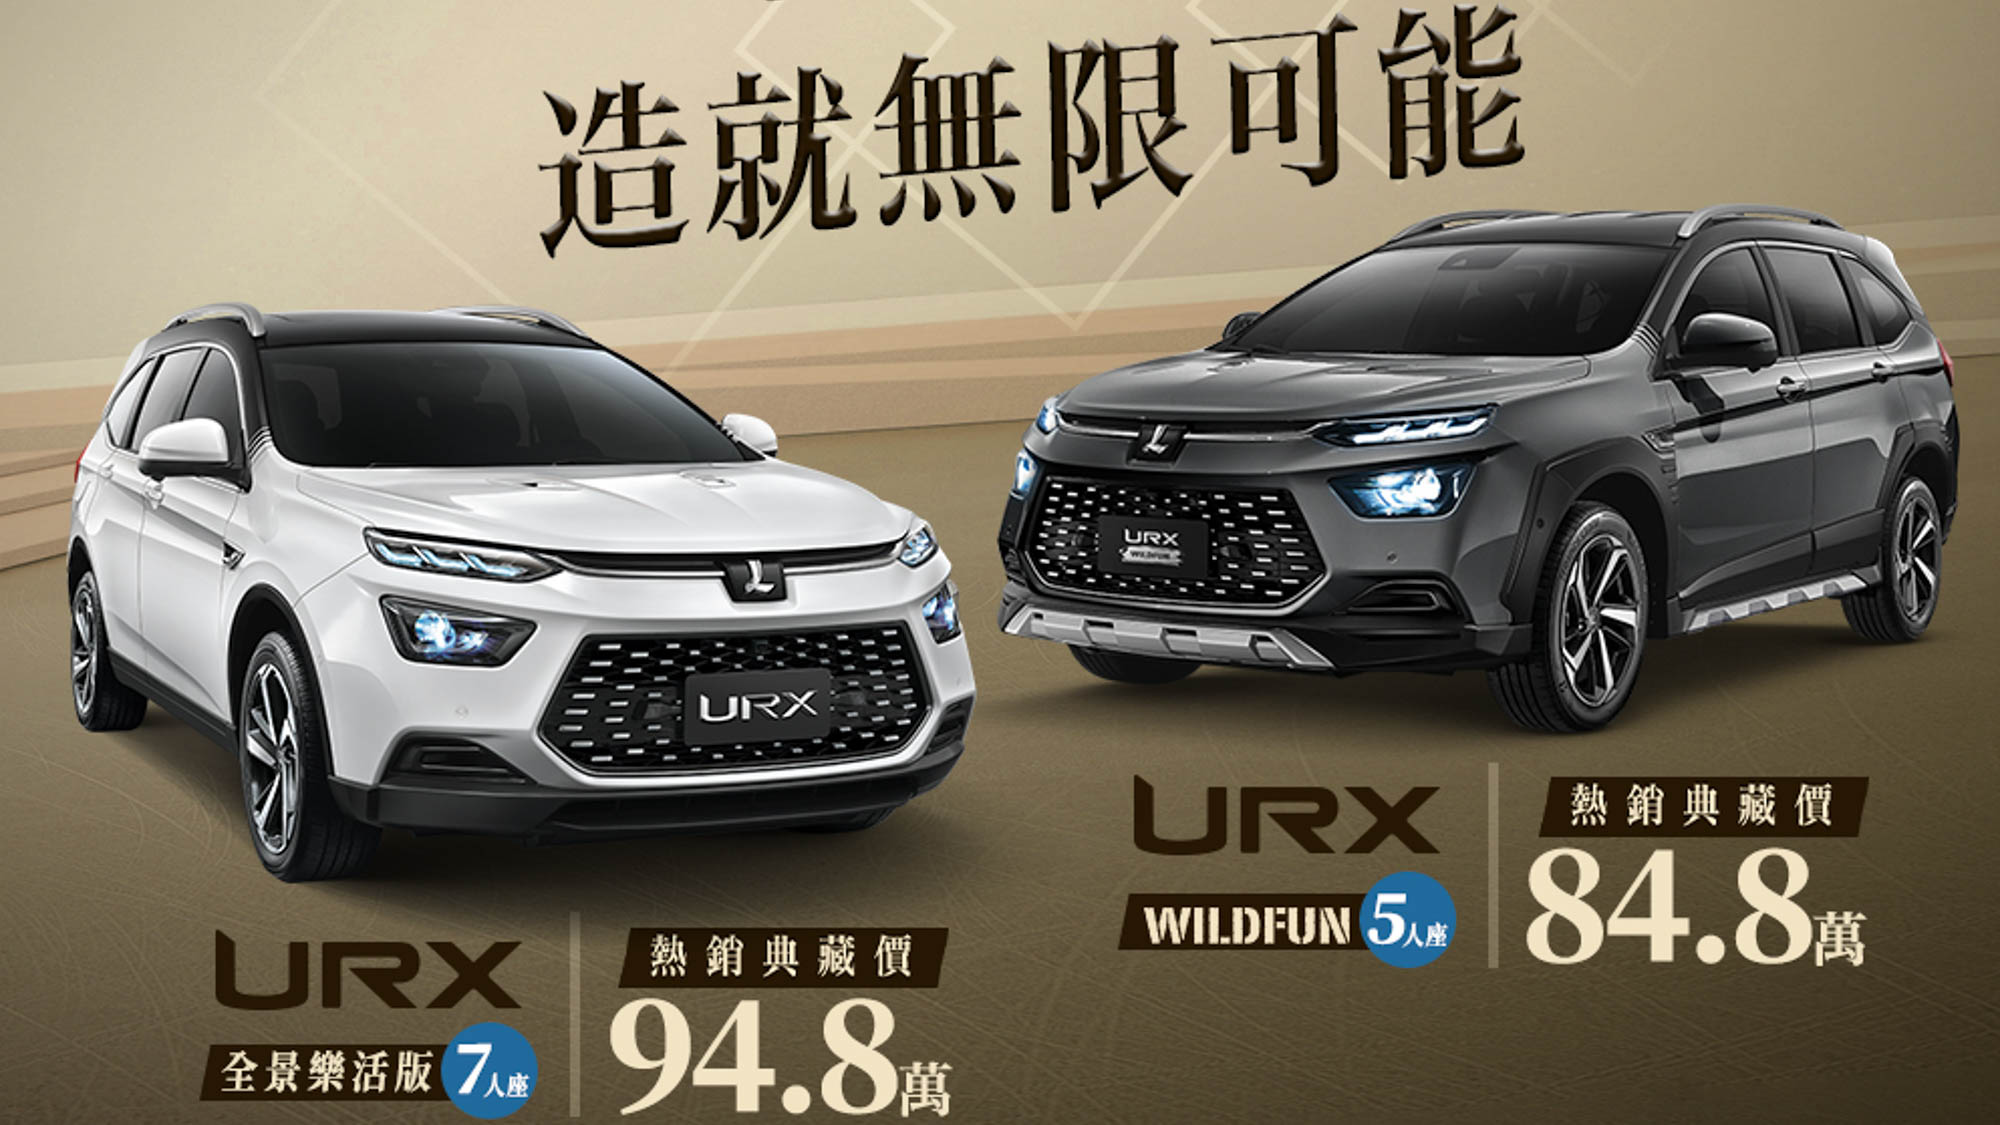 Luxgen URX「典藏價」最低 84.8 萬限量追加 200 台